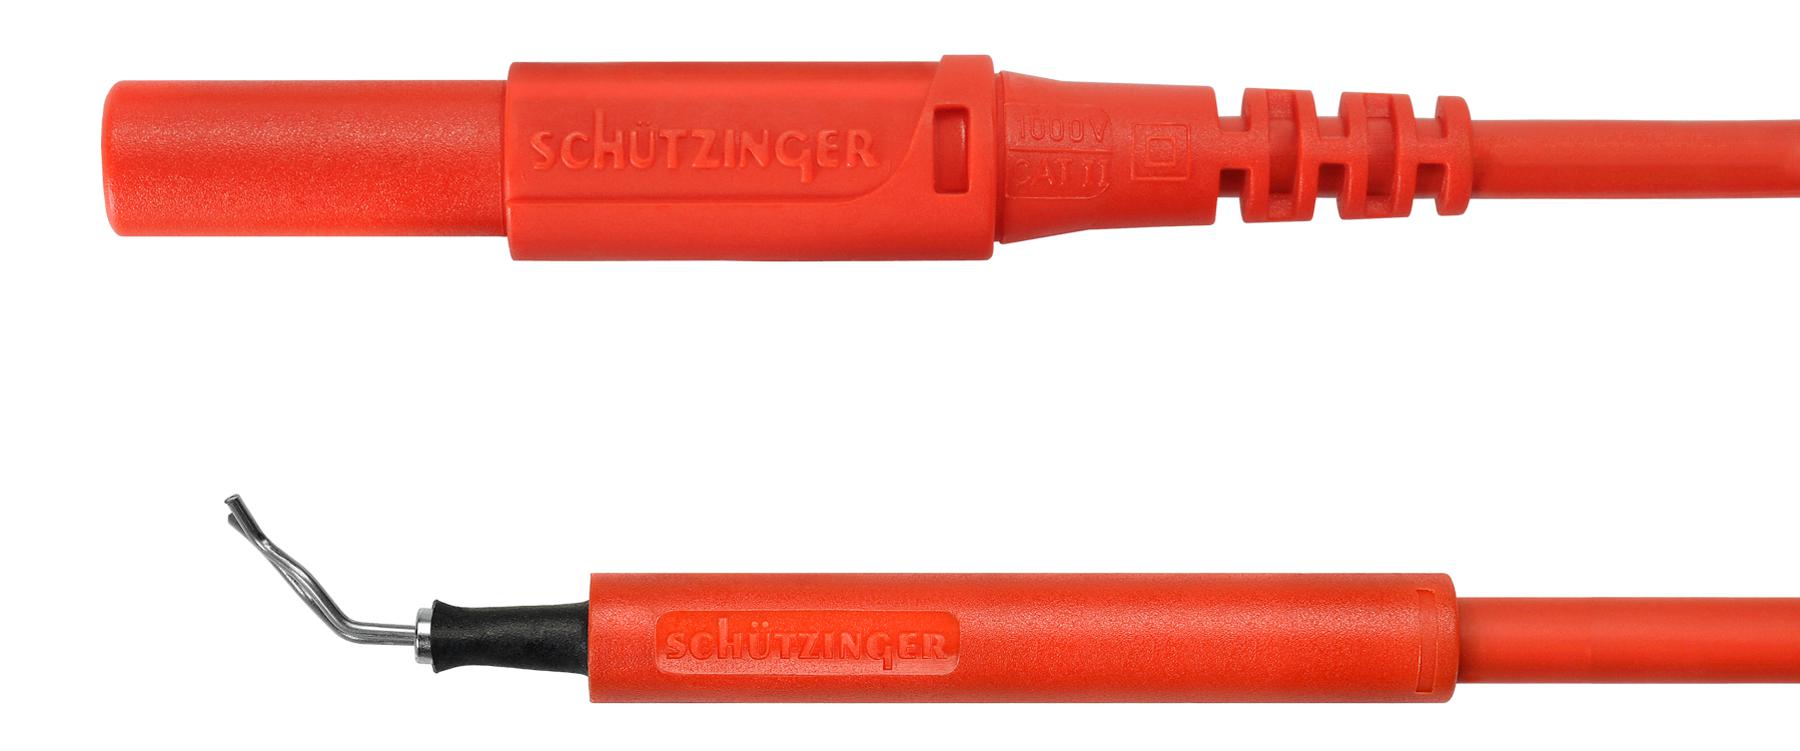 Schutzinger Al 8322 / Zpk / 1 / 100 / Rt Test Lead, 4mm Banana Plug-Test Clip, 1M